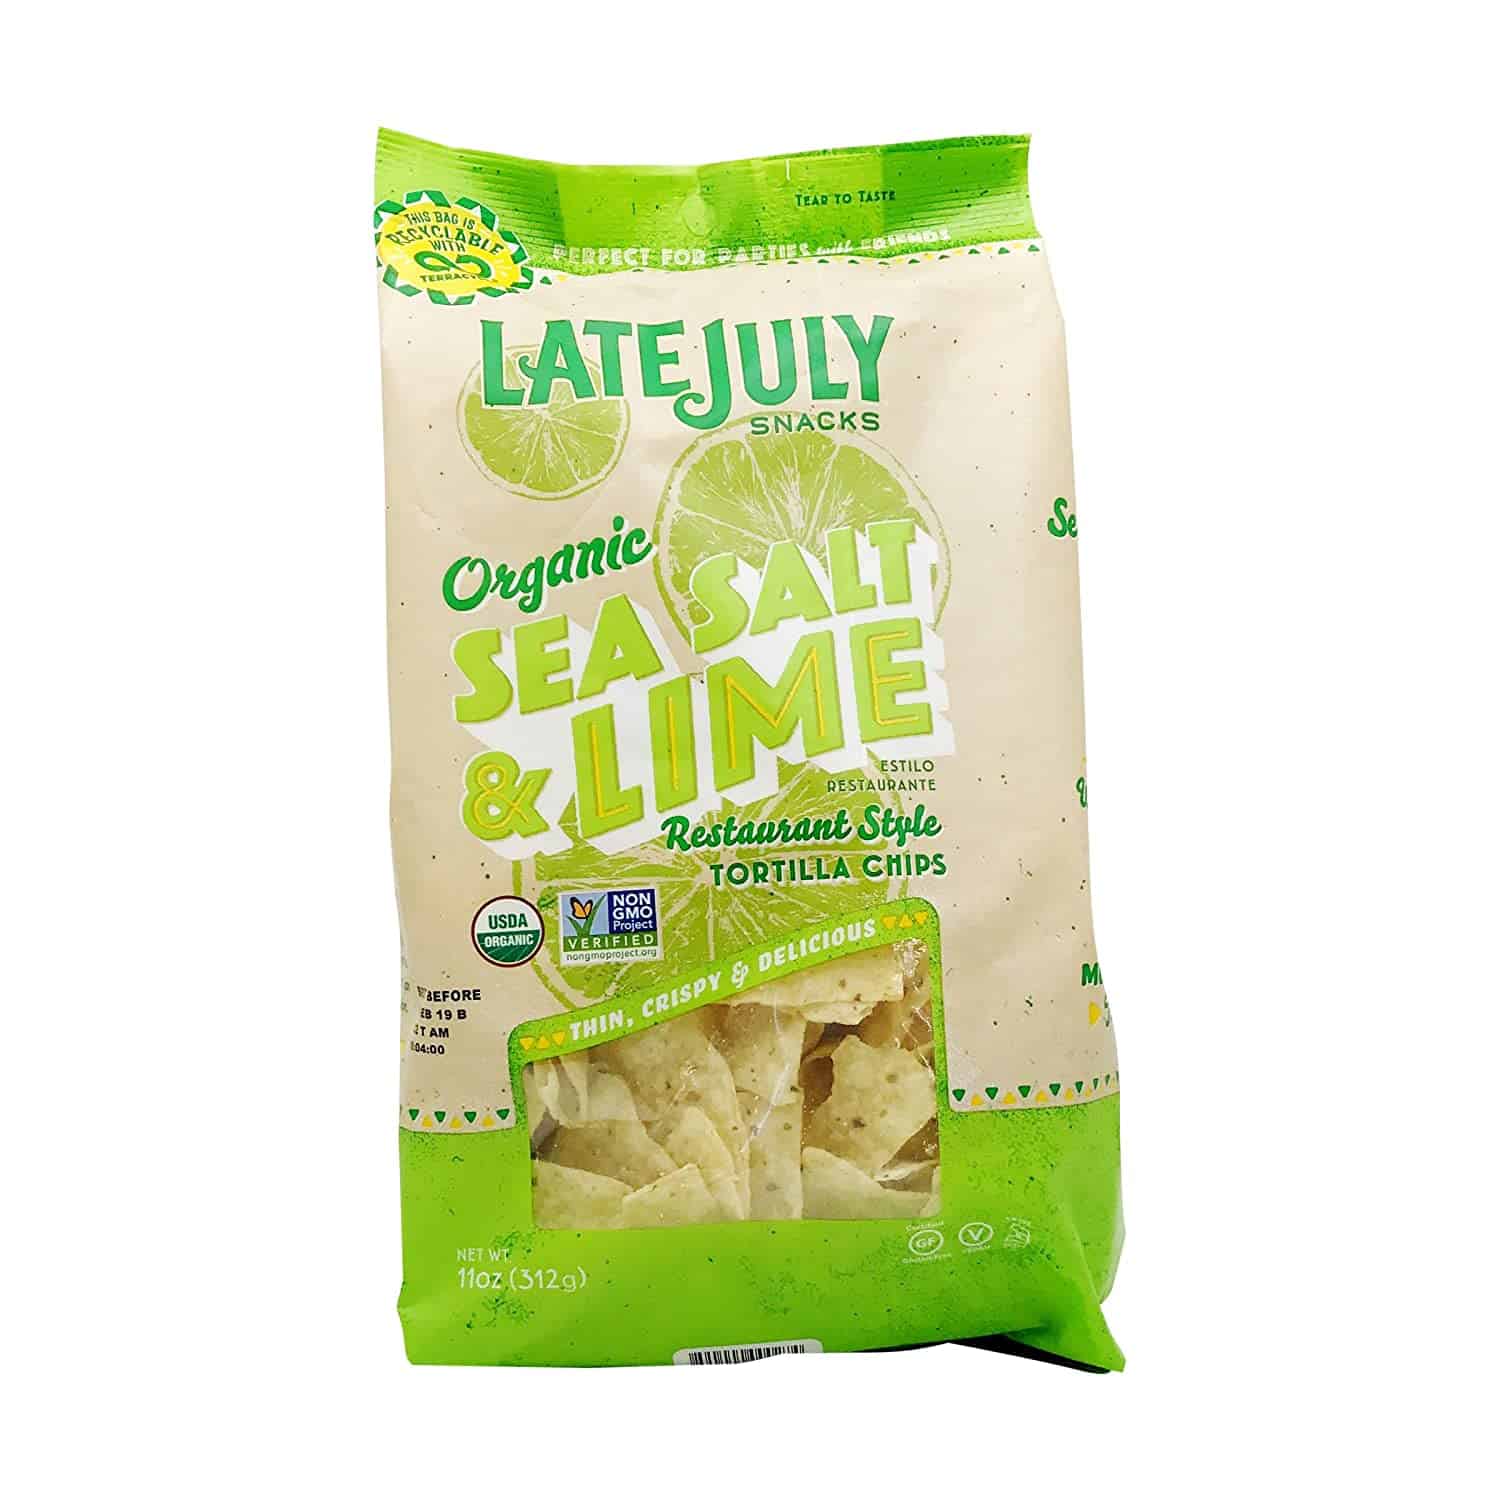 LATE JULY Snacks Restaurant Style Sea Salt & Lime Tortilla Chips, 10 oz. Bag